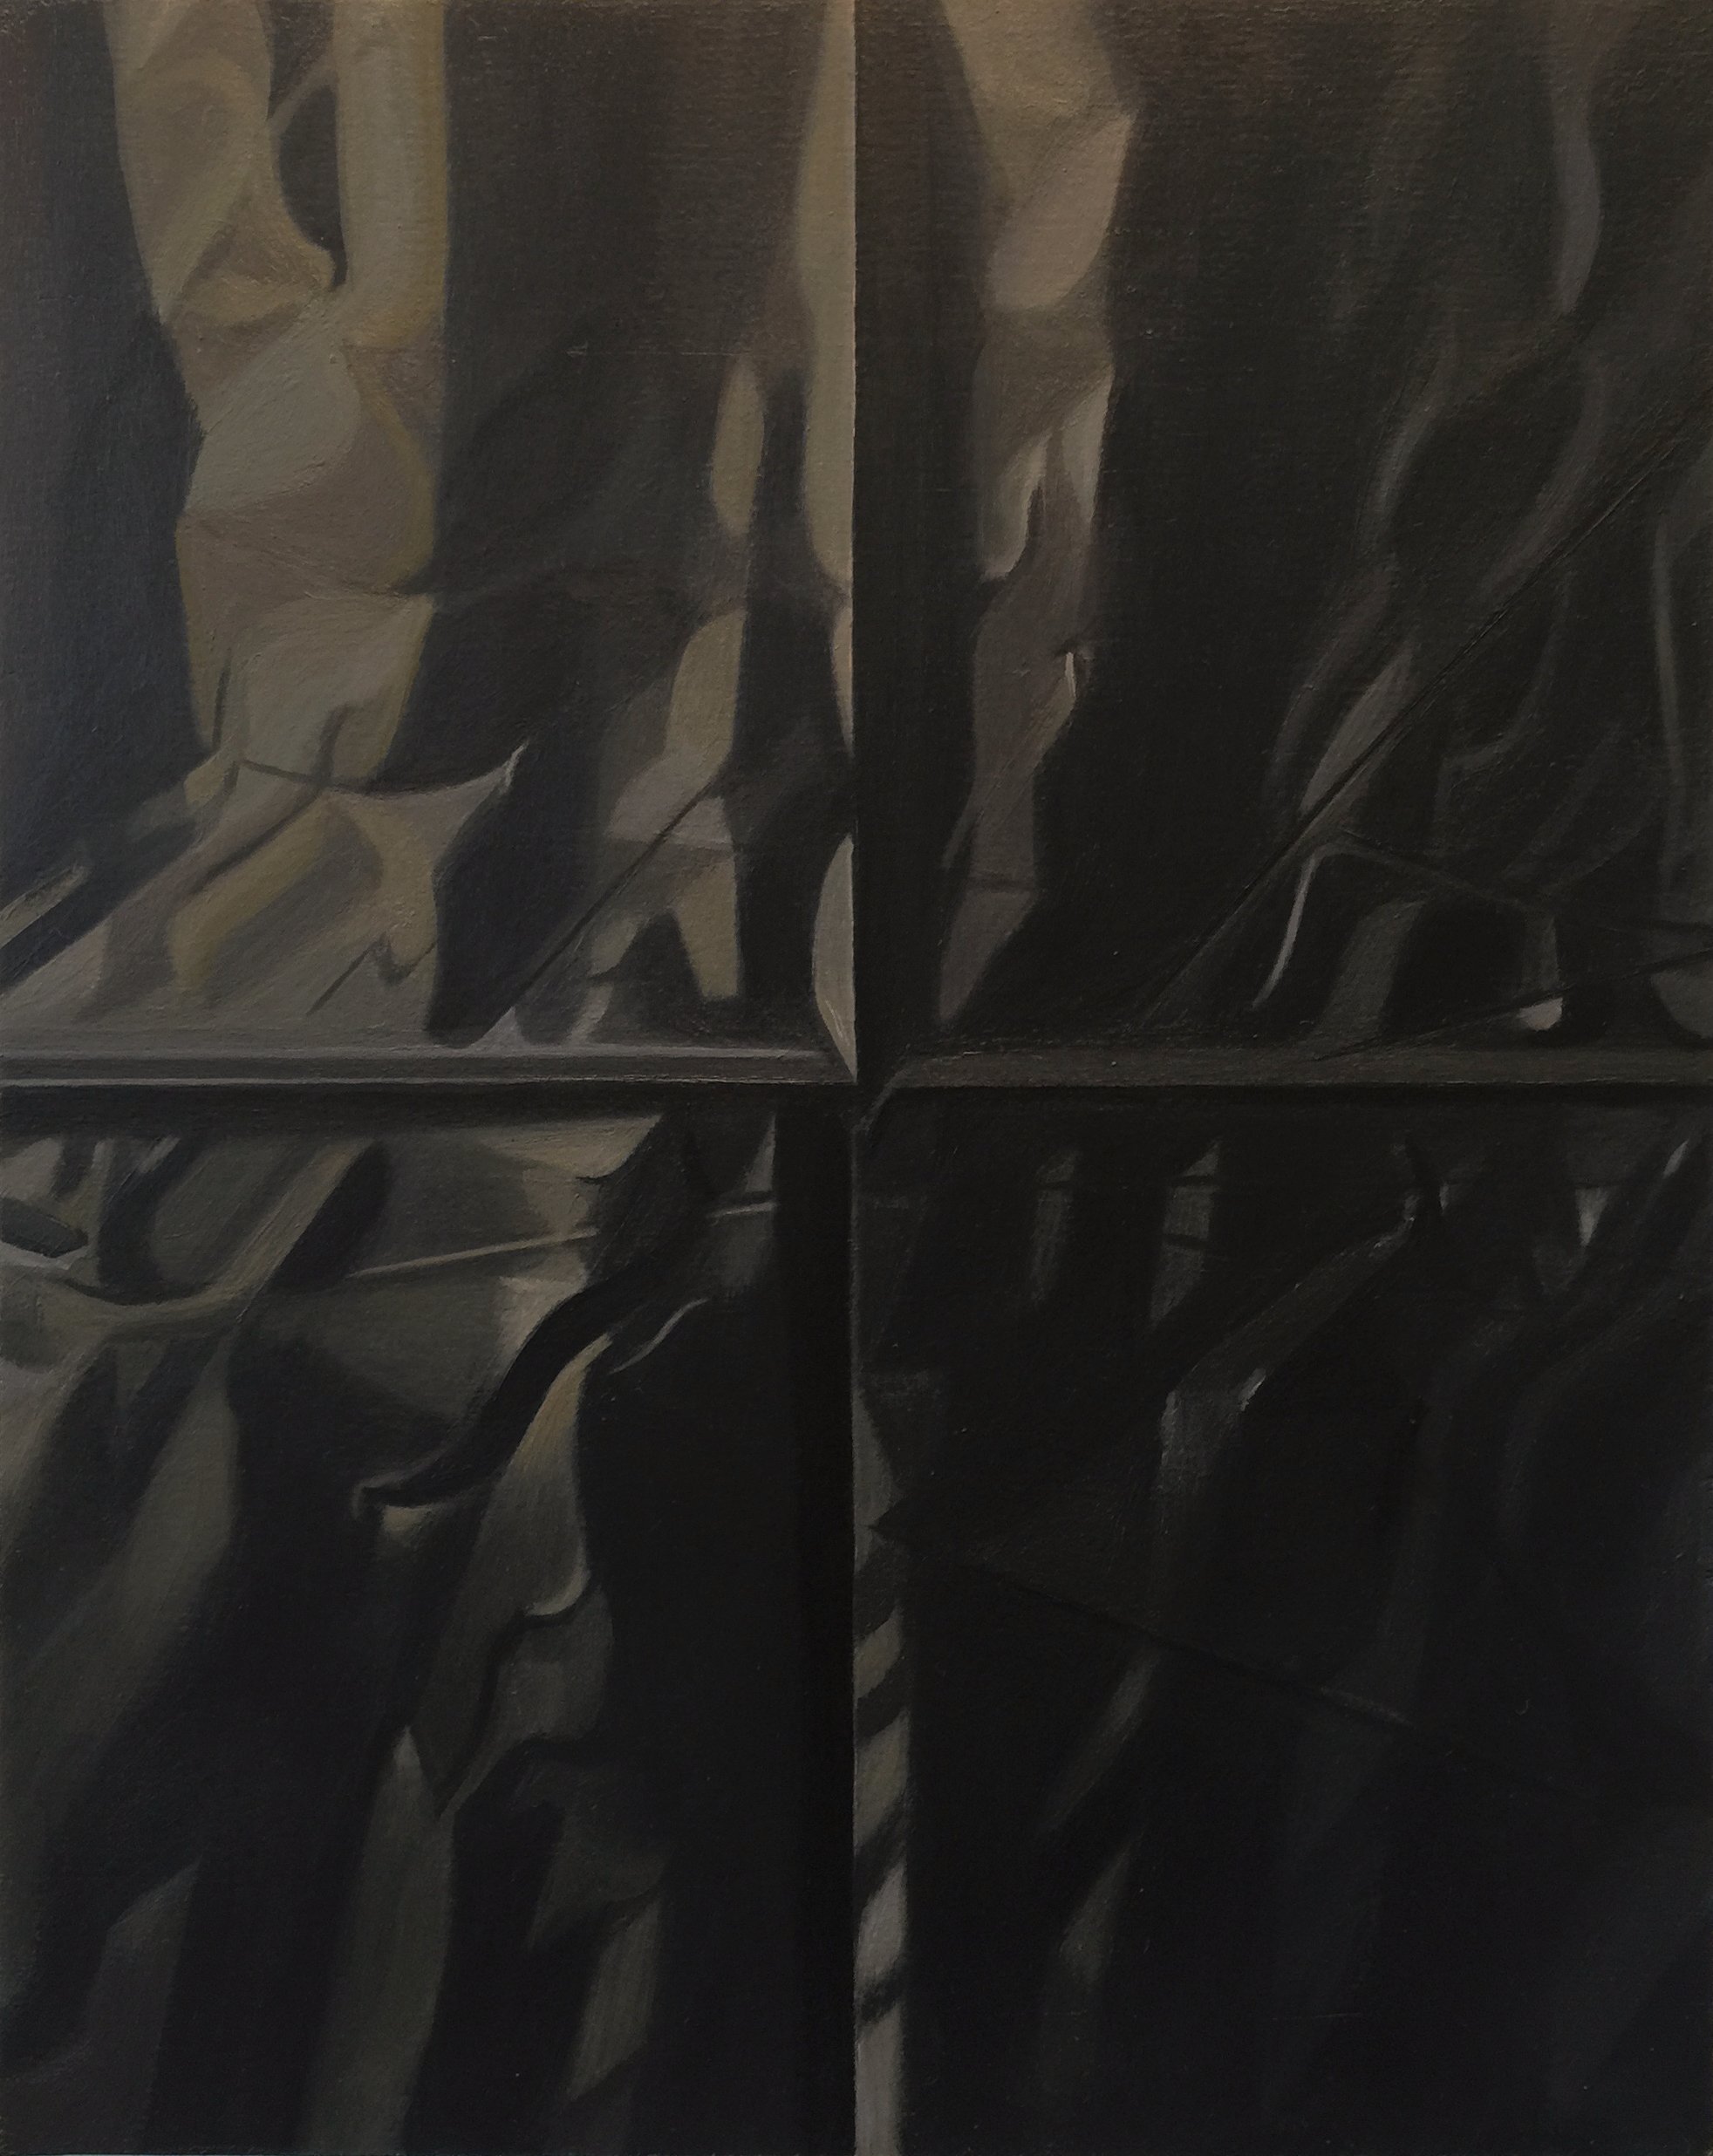  Untitled  8x10”, oil on panel, 2015   